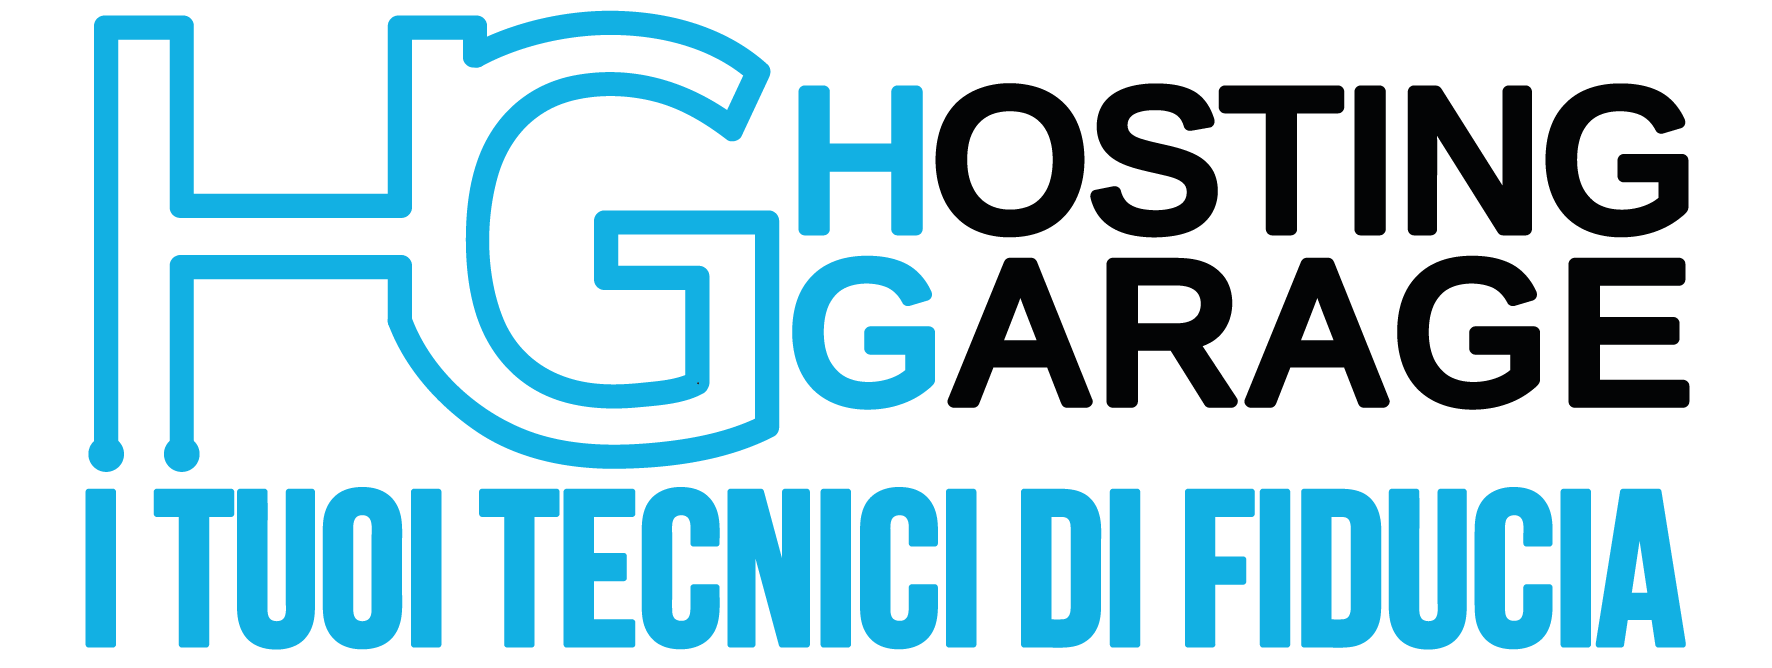 logo hostingarage